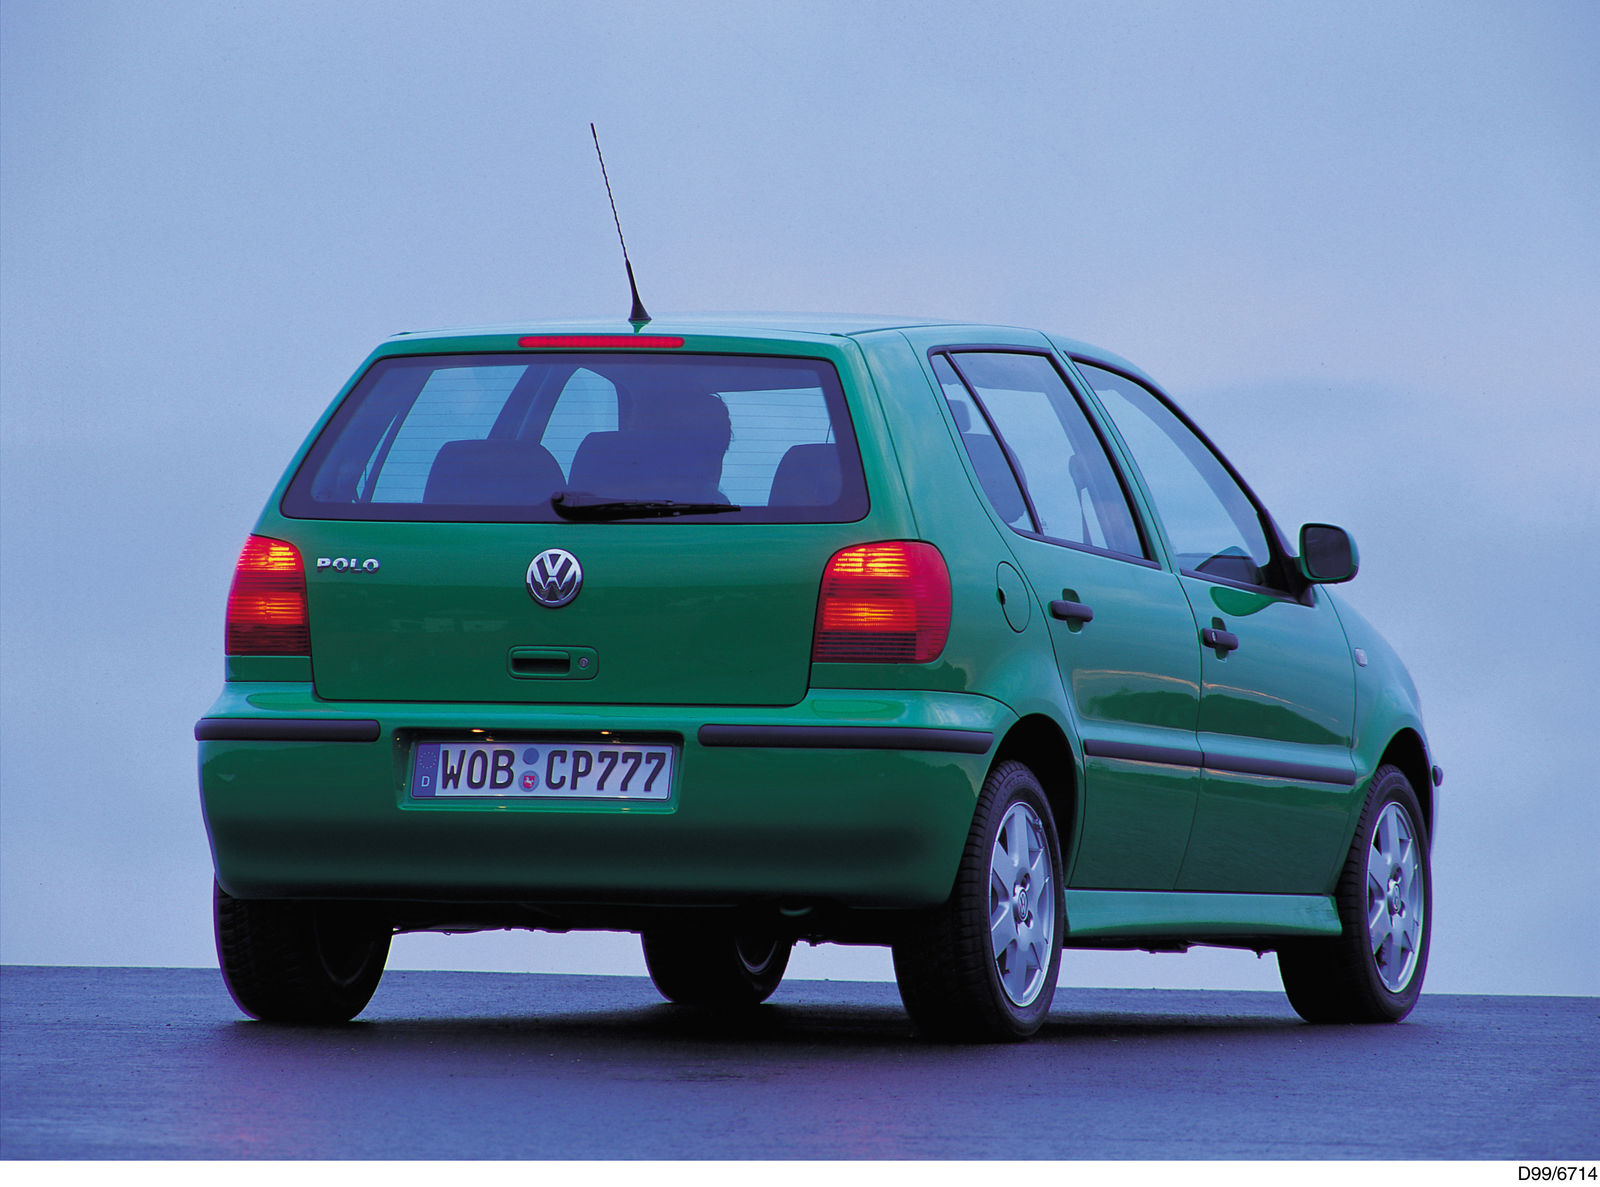 Product: Polo (1999) Volkswagen Newsroom